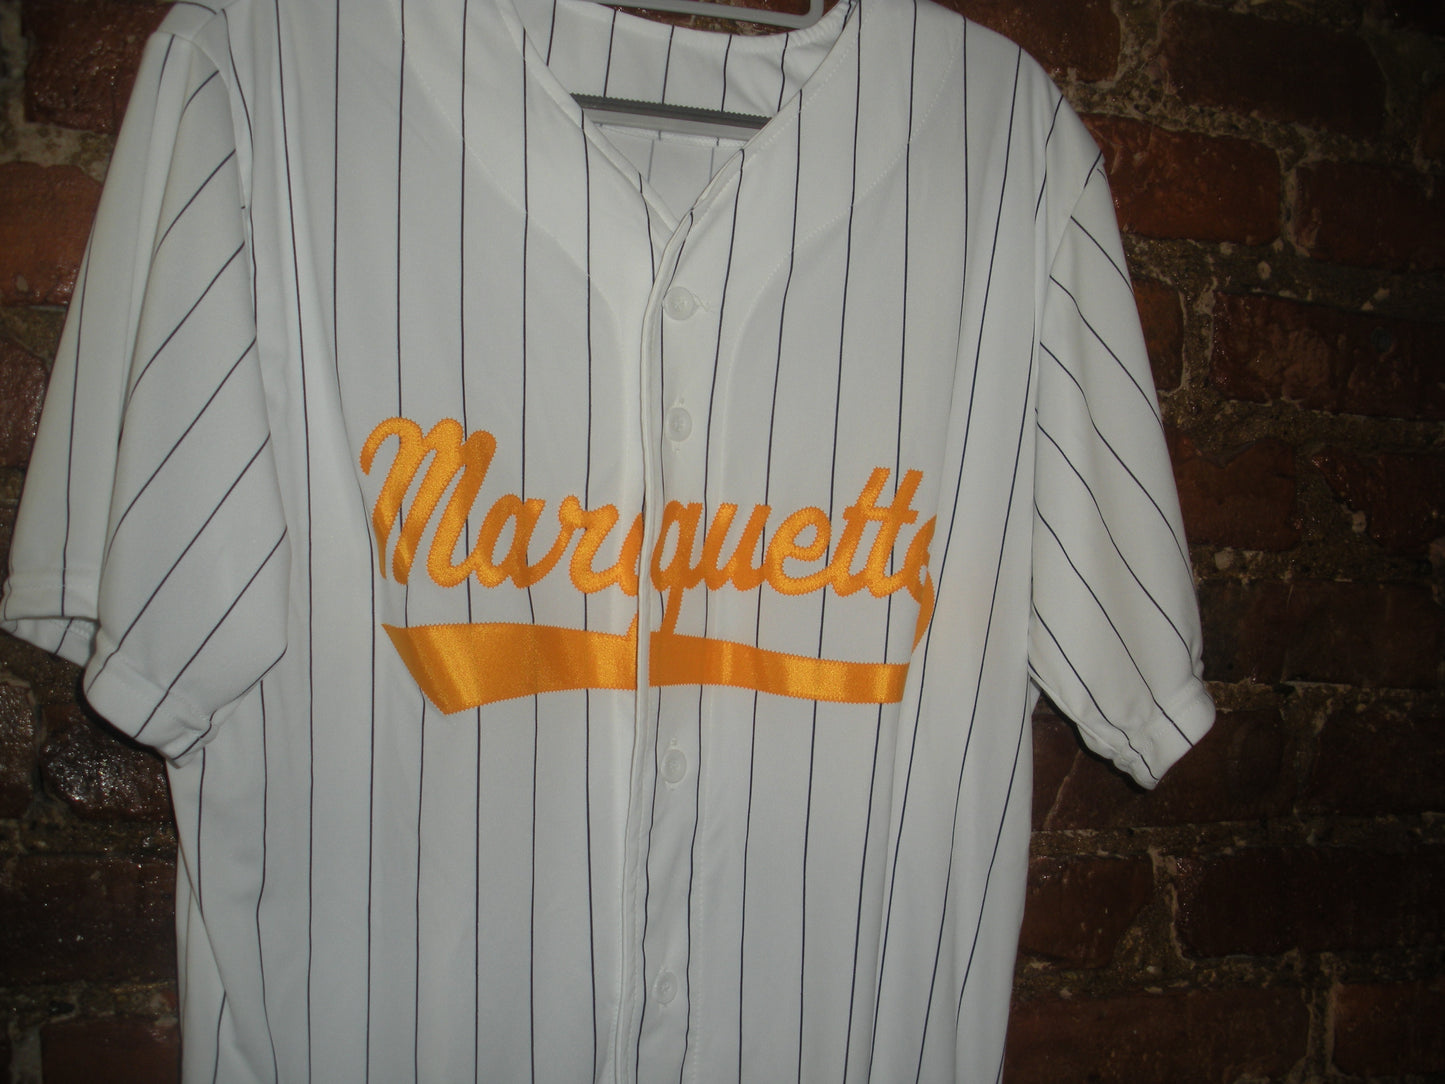 Marquette Baseball Jersey